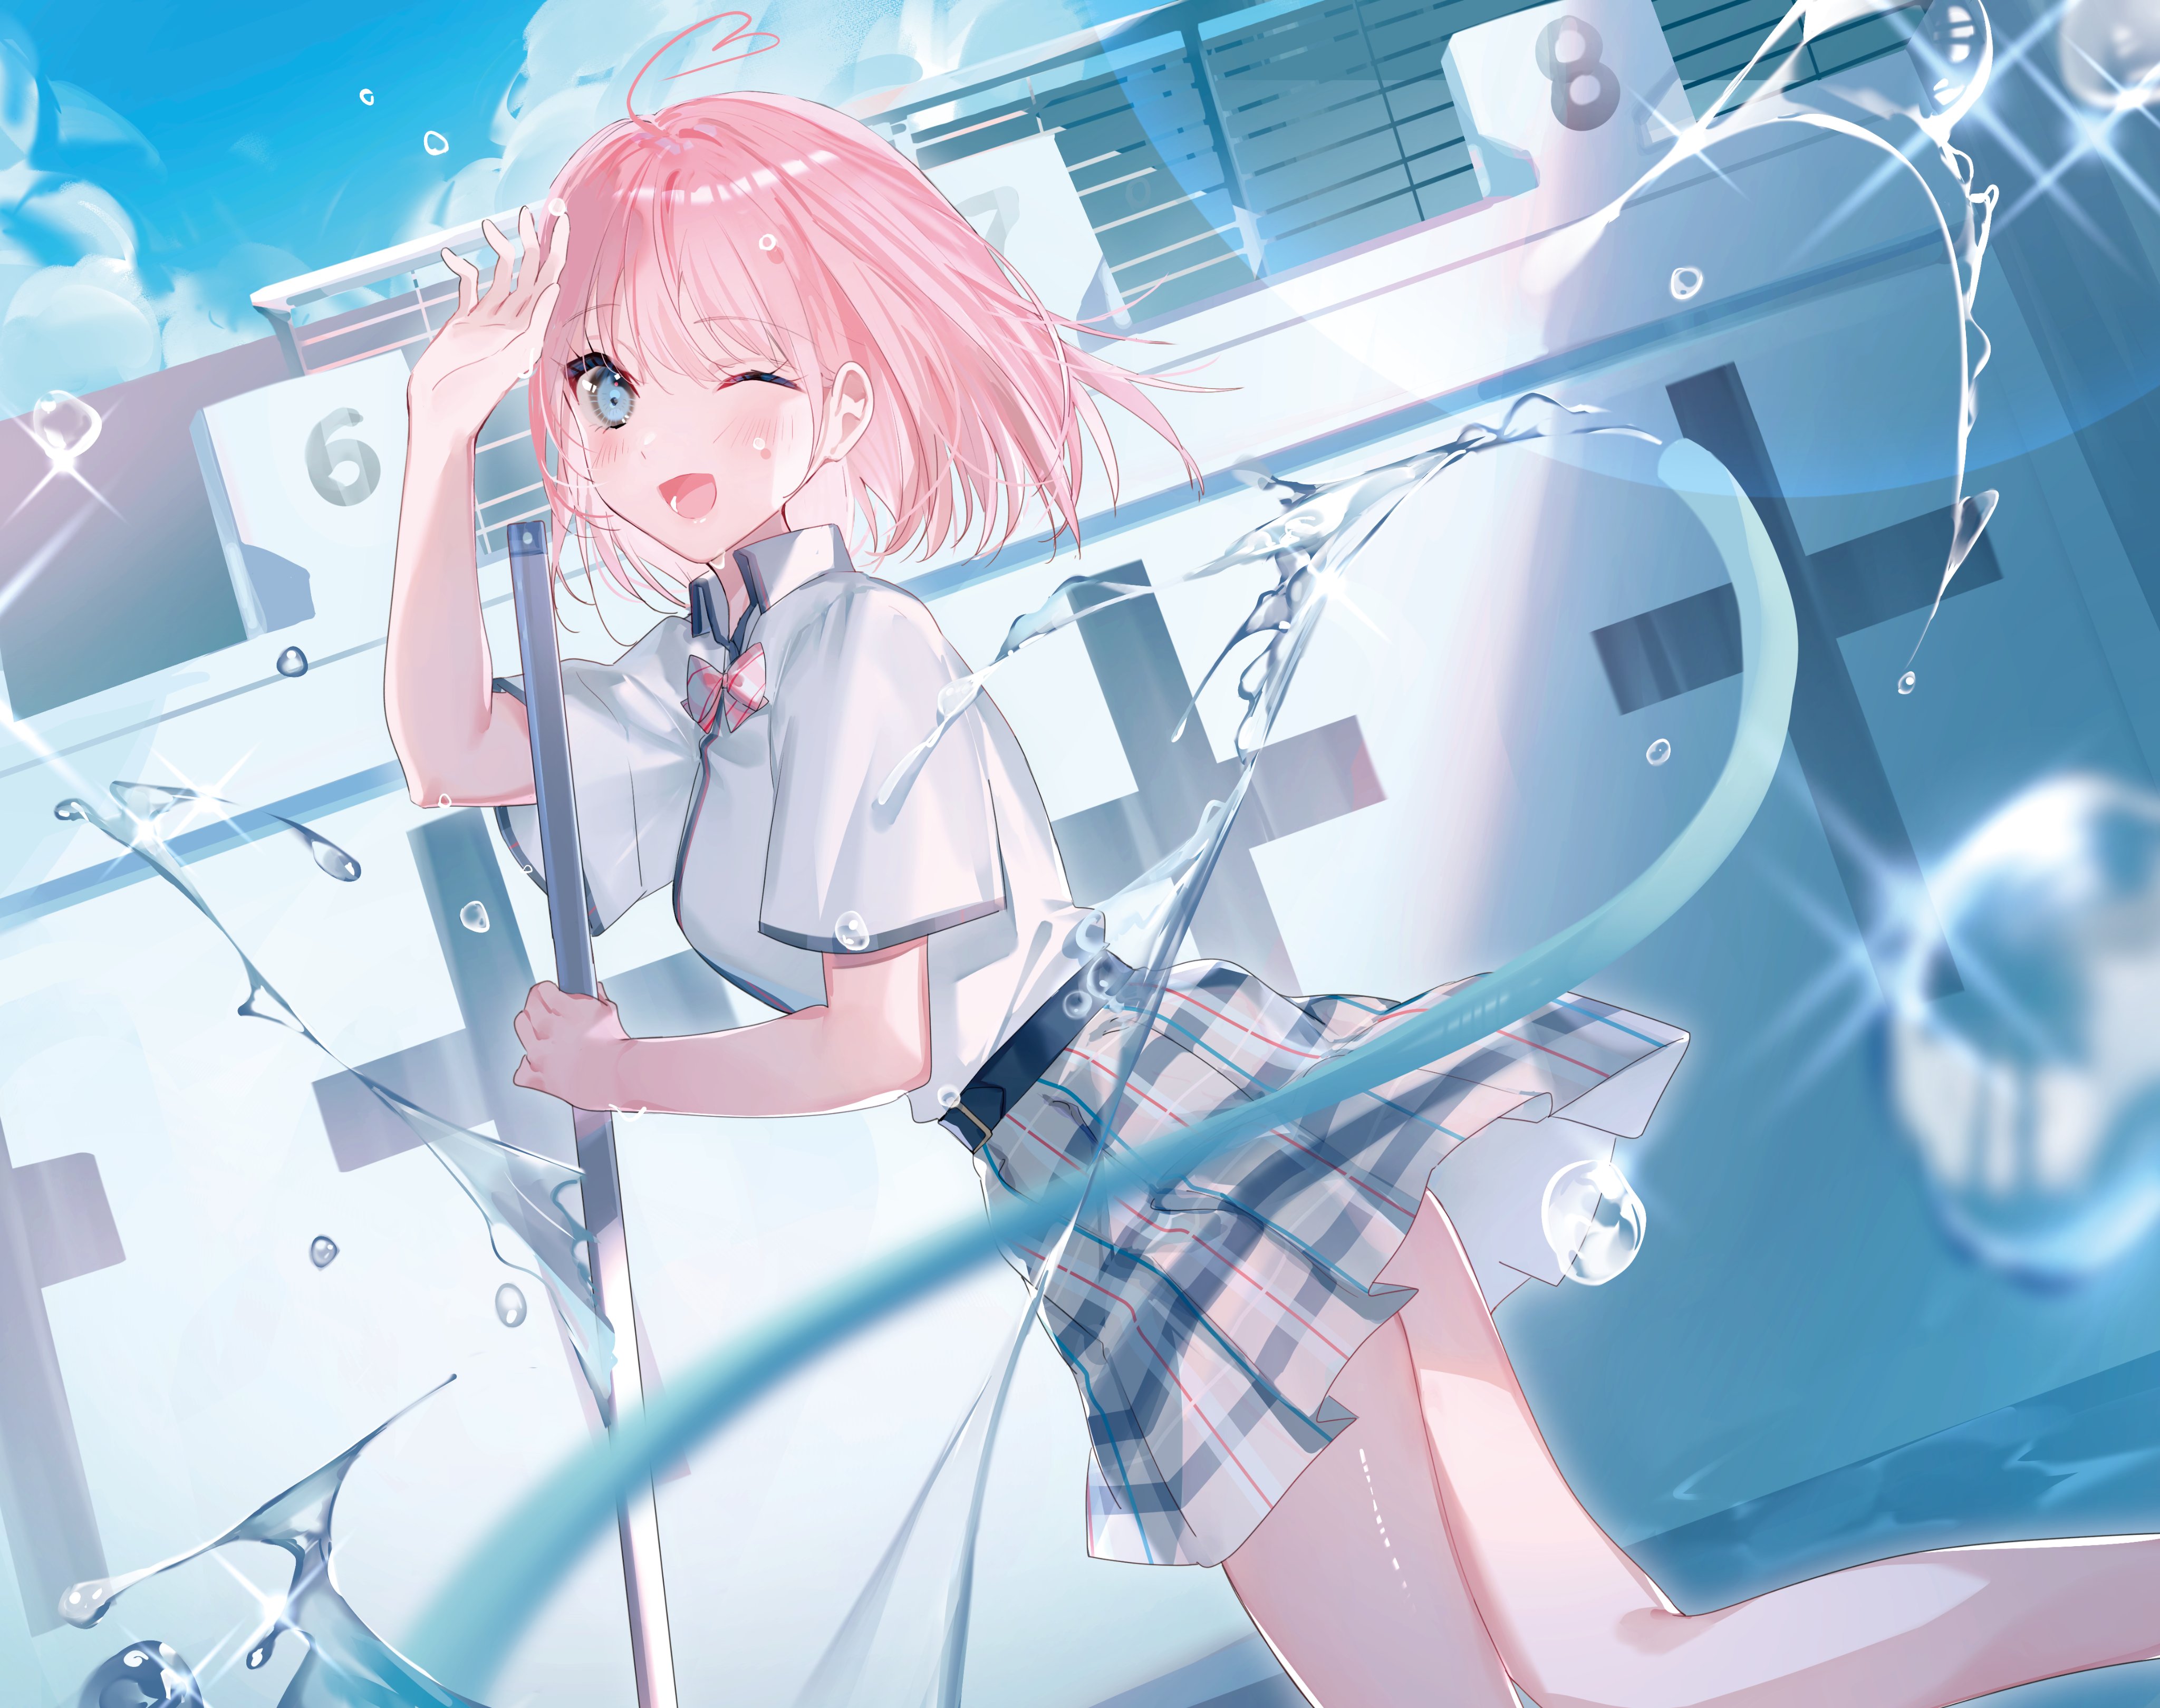 Anime Anime Girls Pink Hair Sky Clouds Skirt Plaid Skirt Happy One Eye Closed School Uniform Water 4096x3239